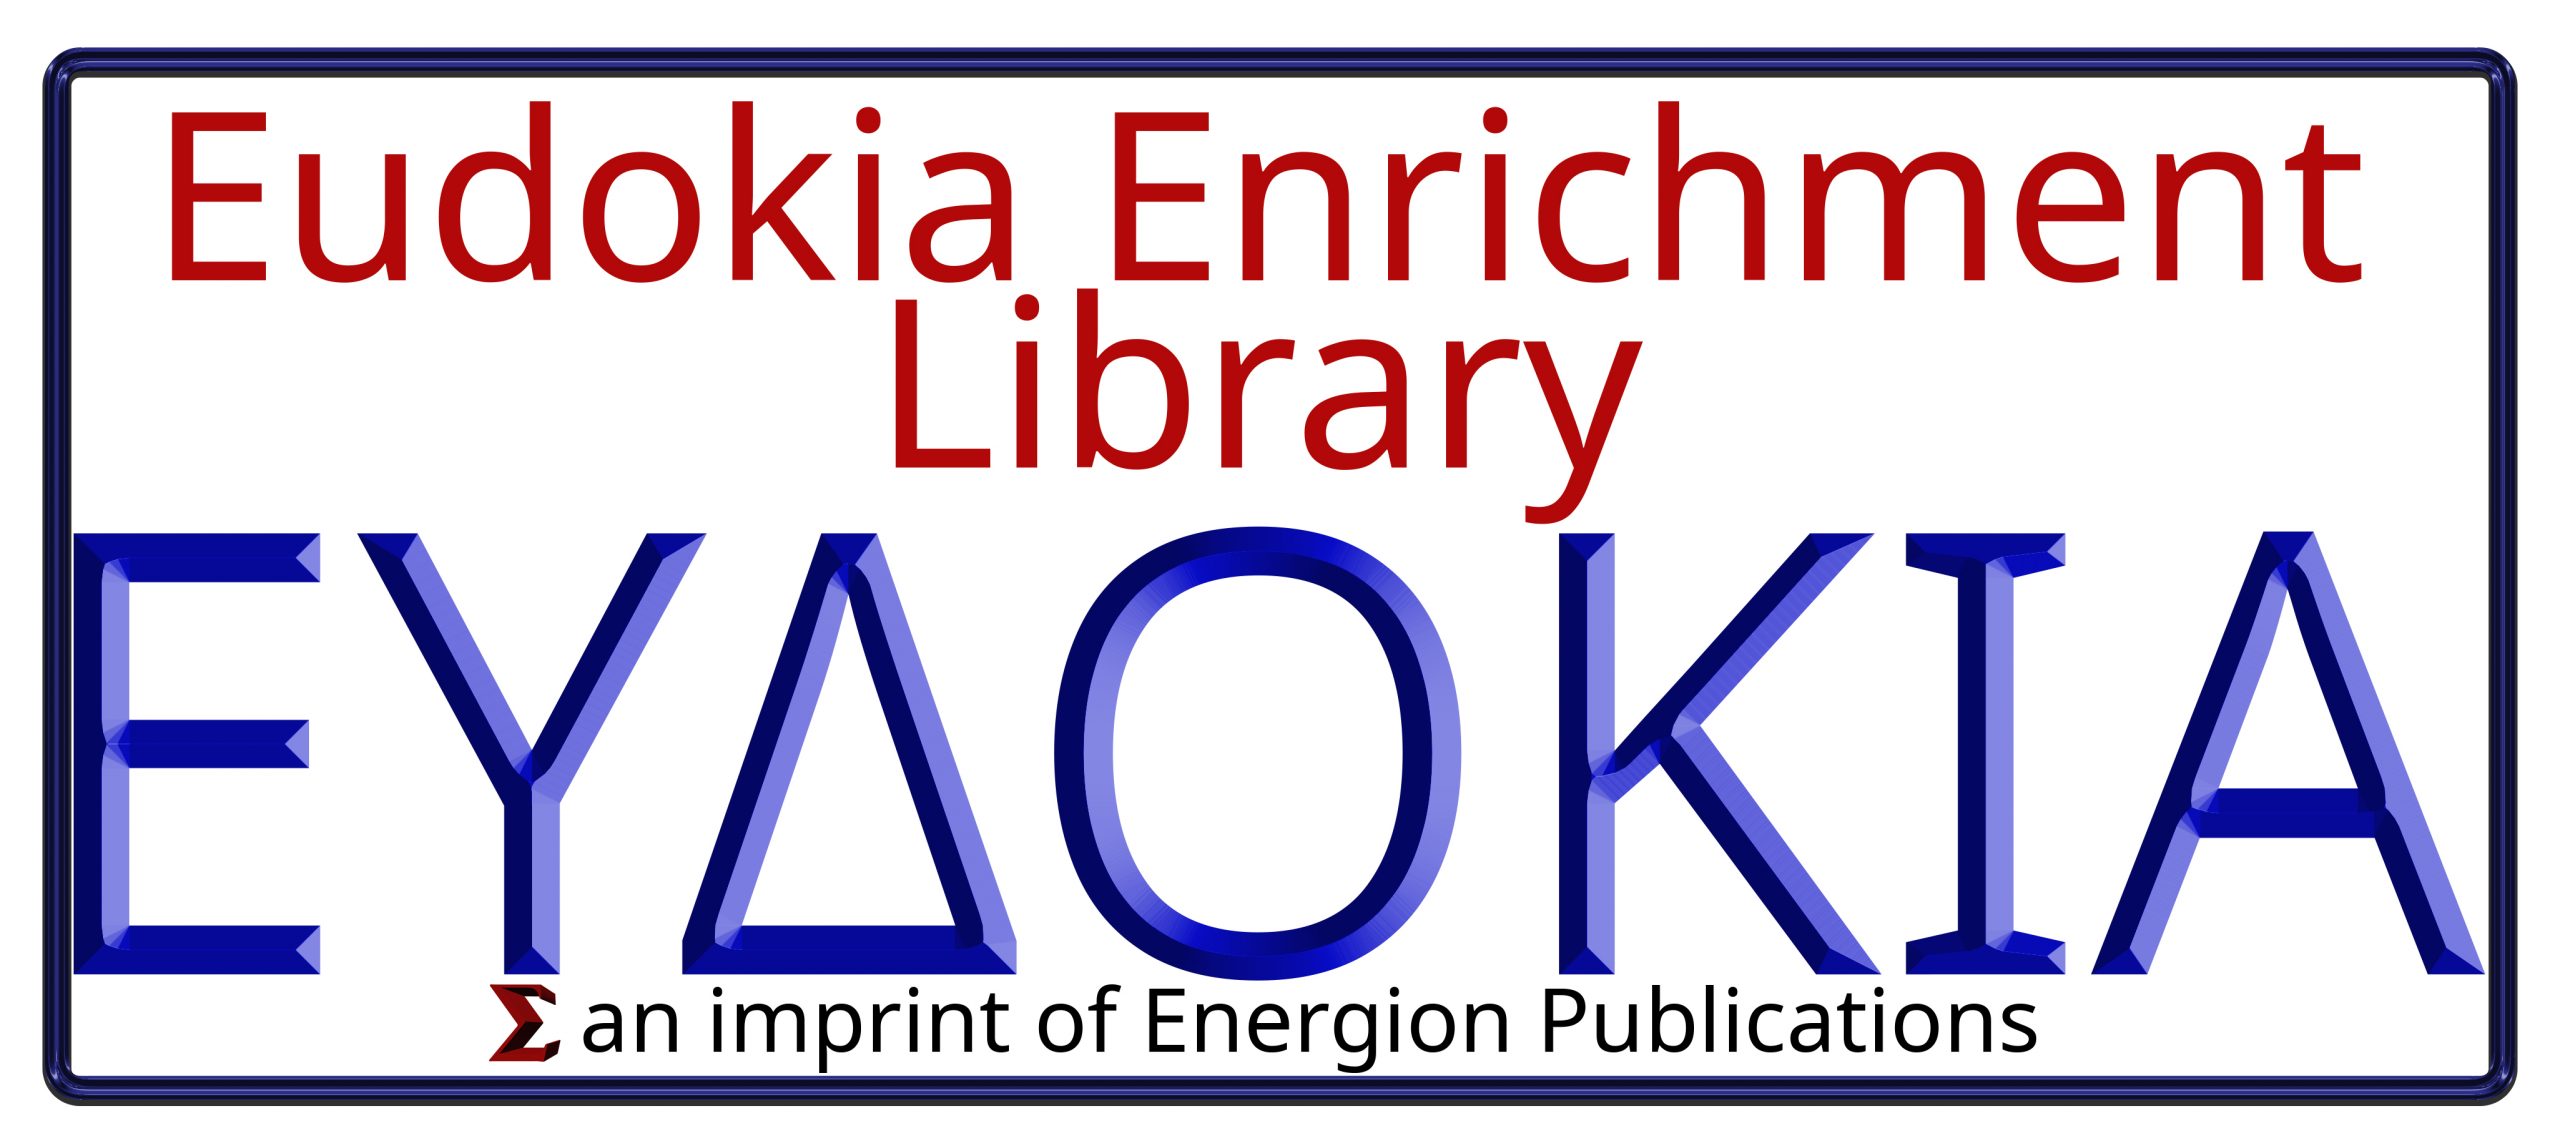 Eudokia Enrichment Library